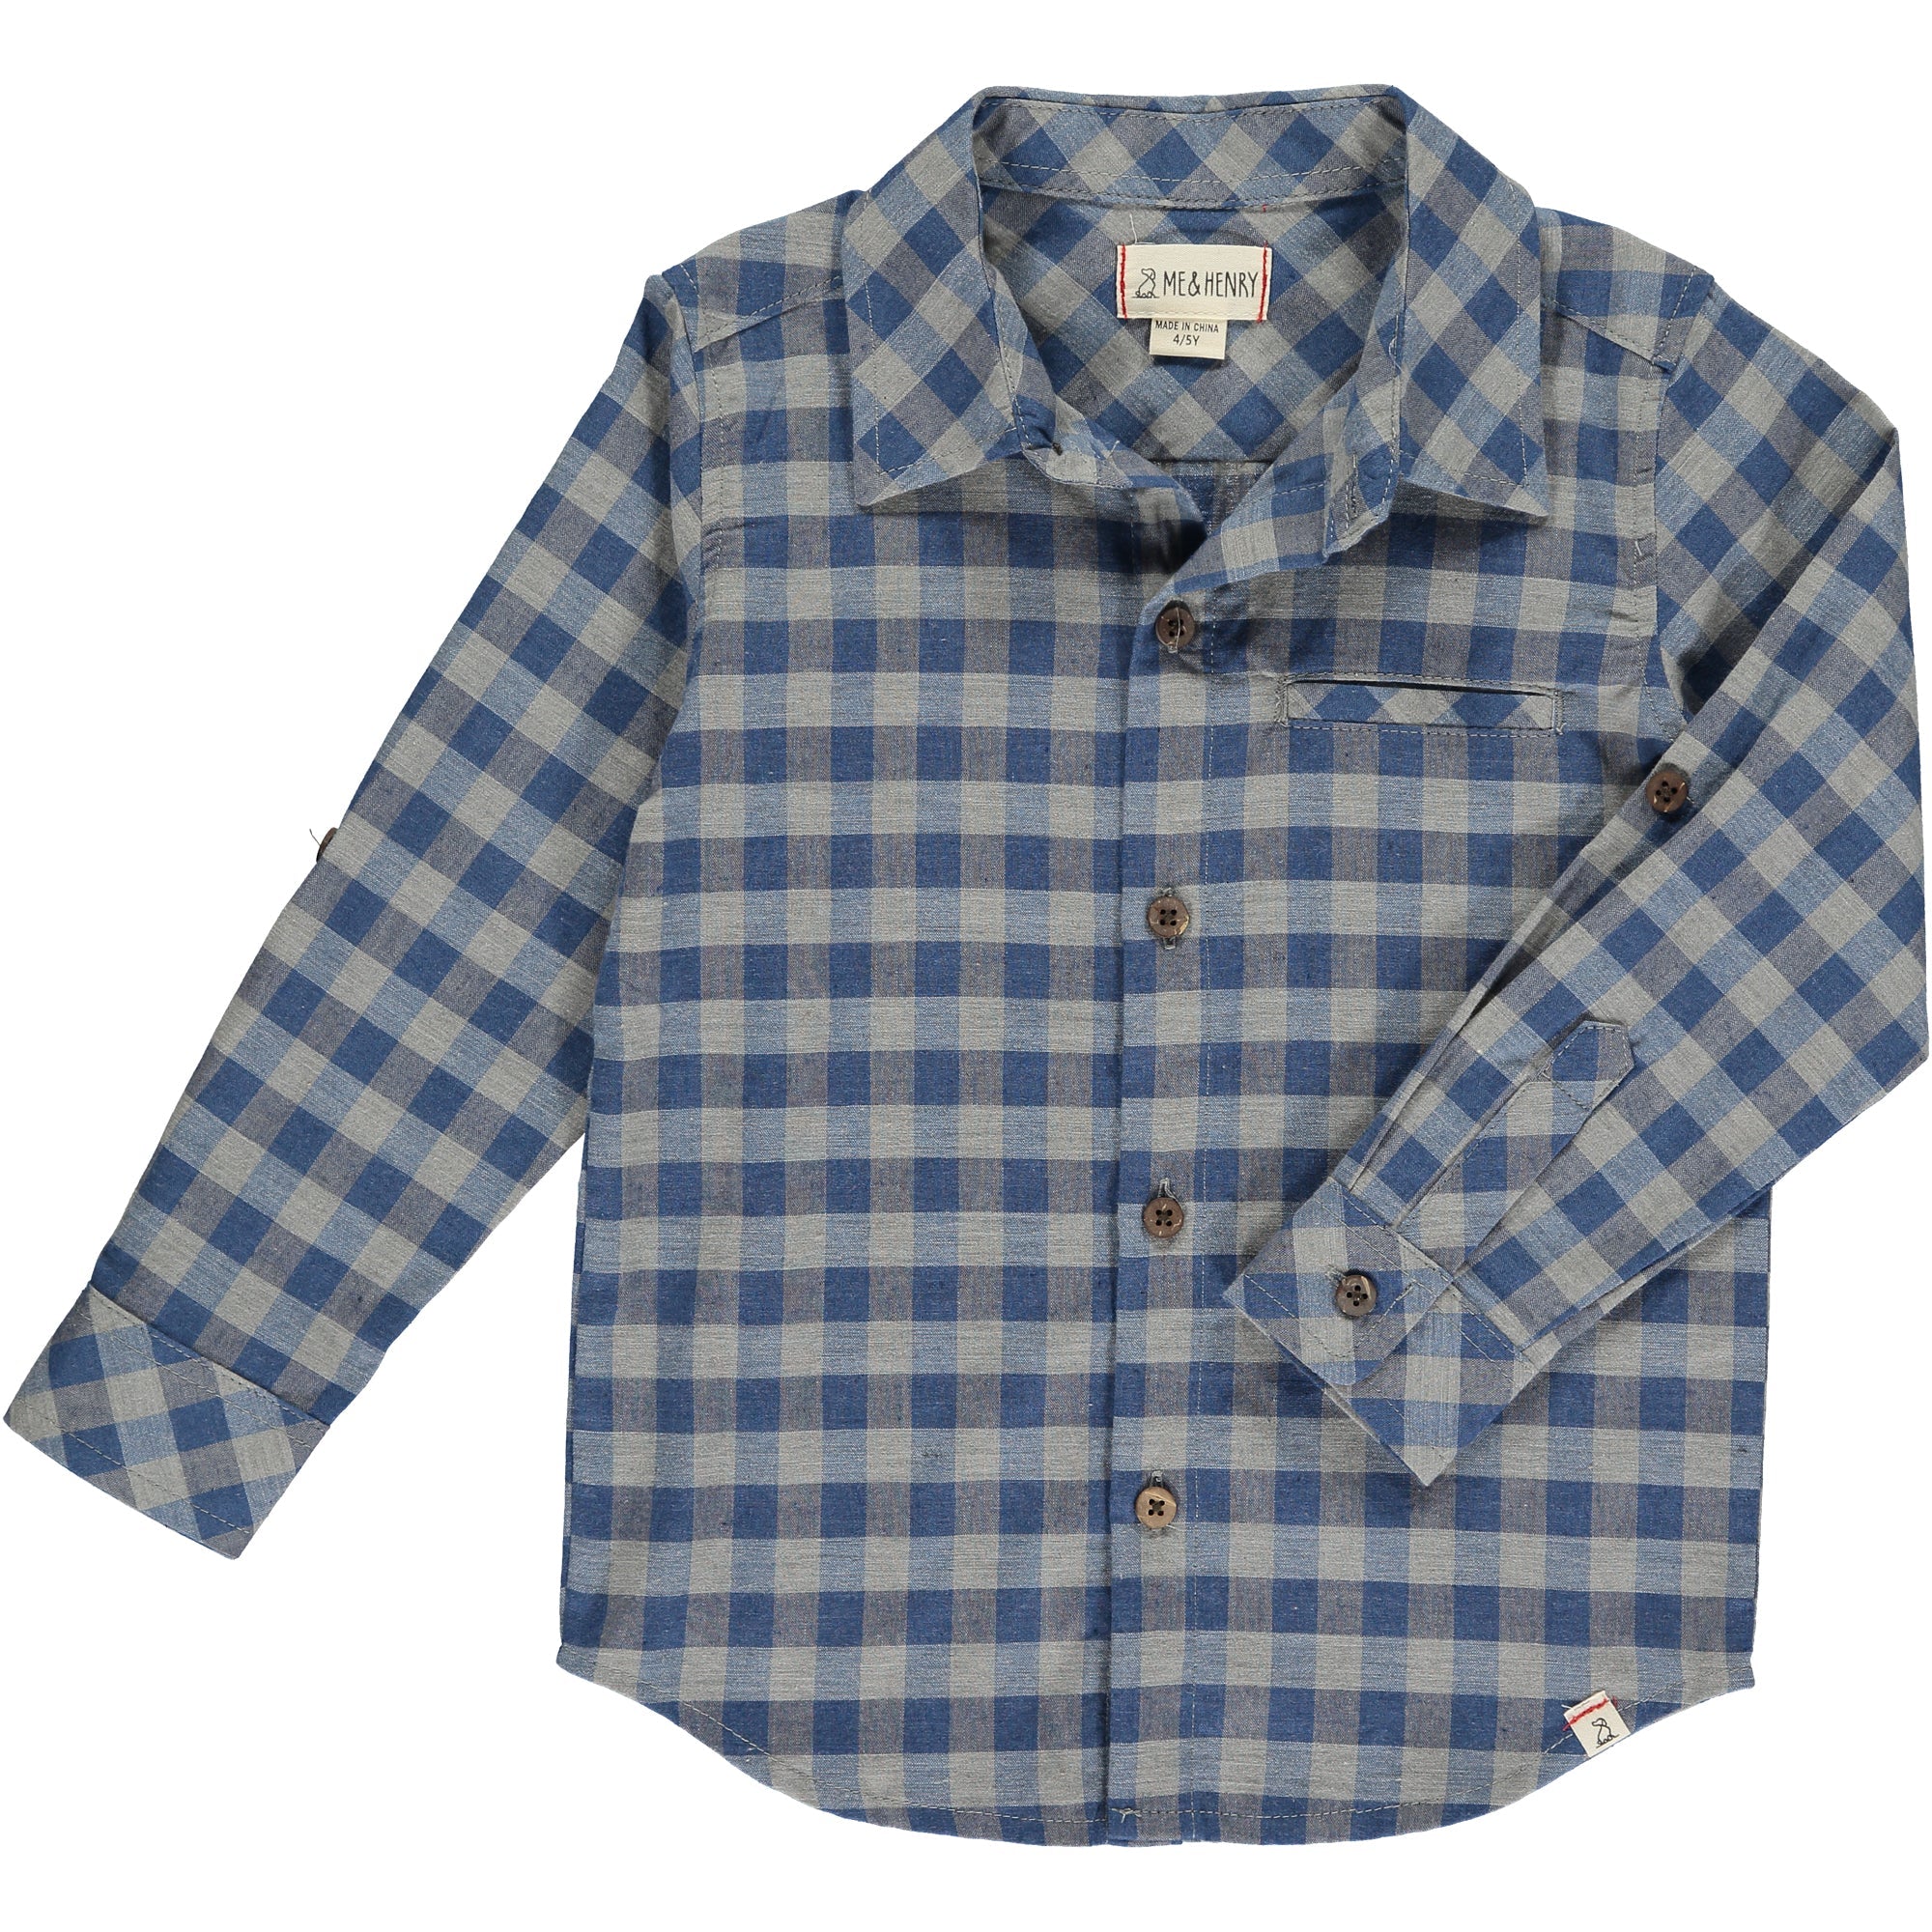 M&H Grey/Blue Plaid Woven Button Up Shirt